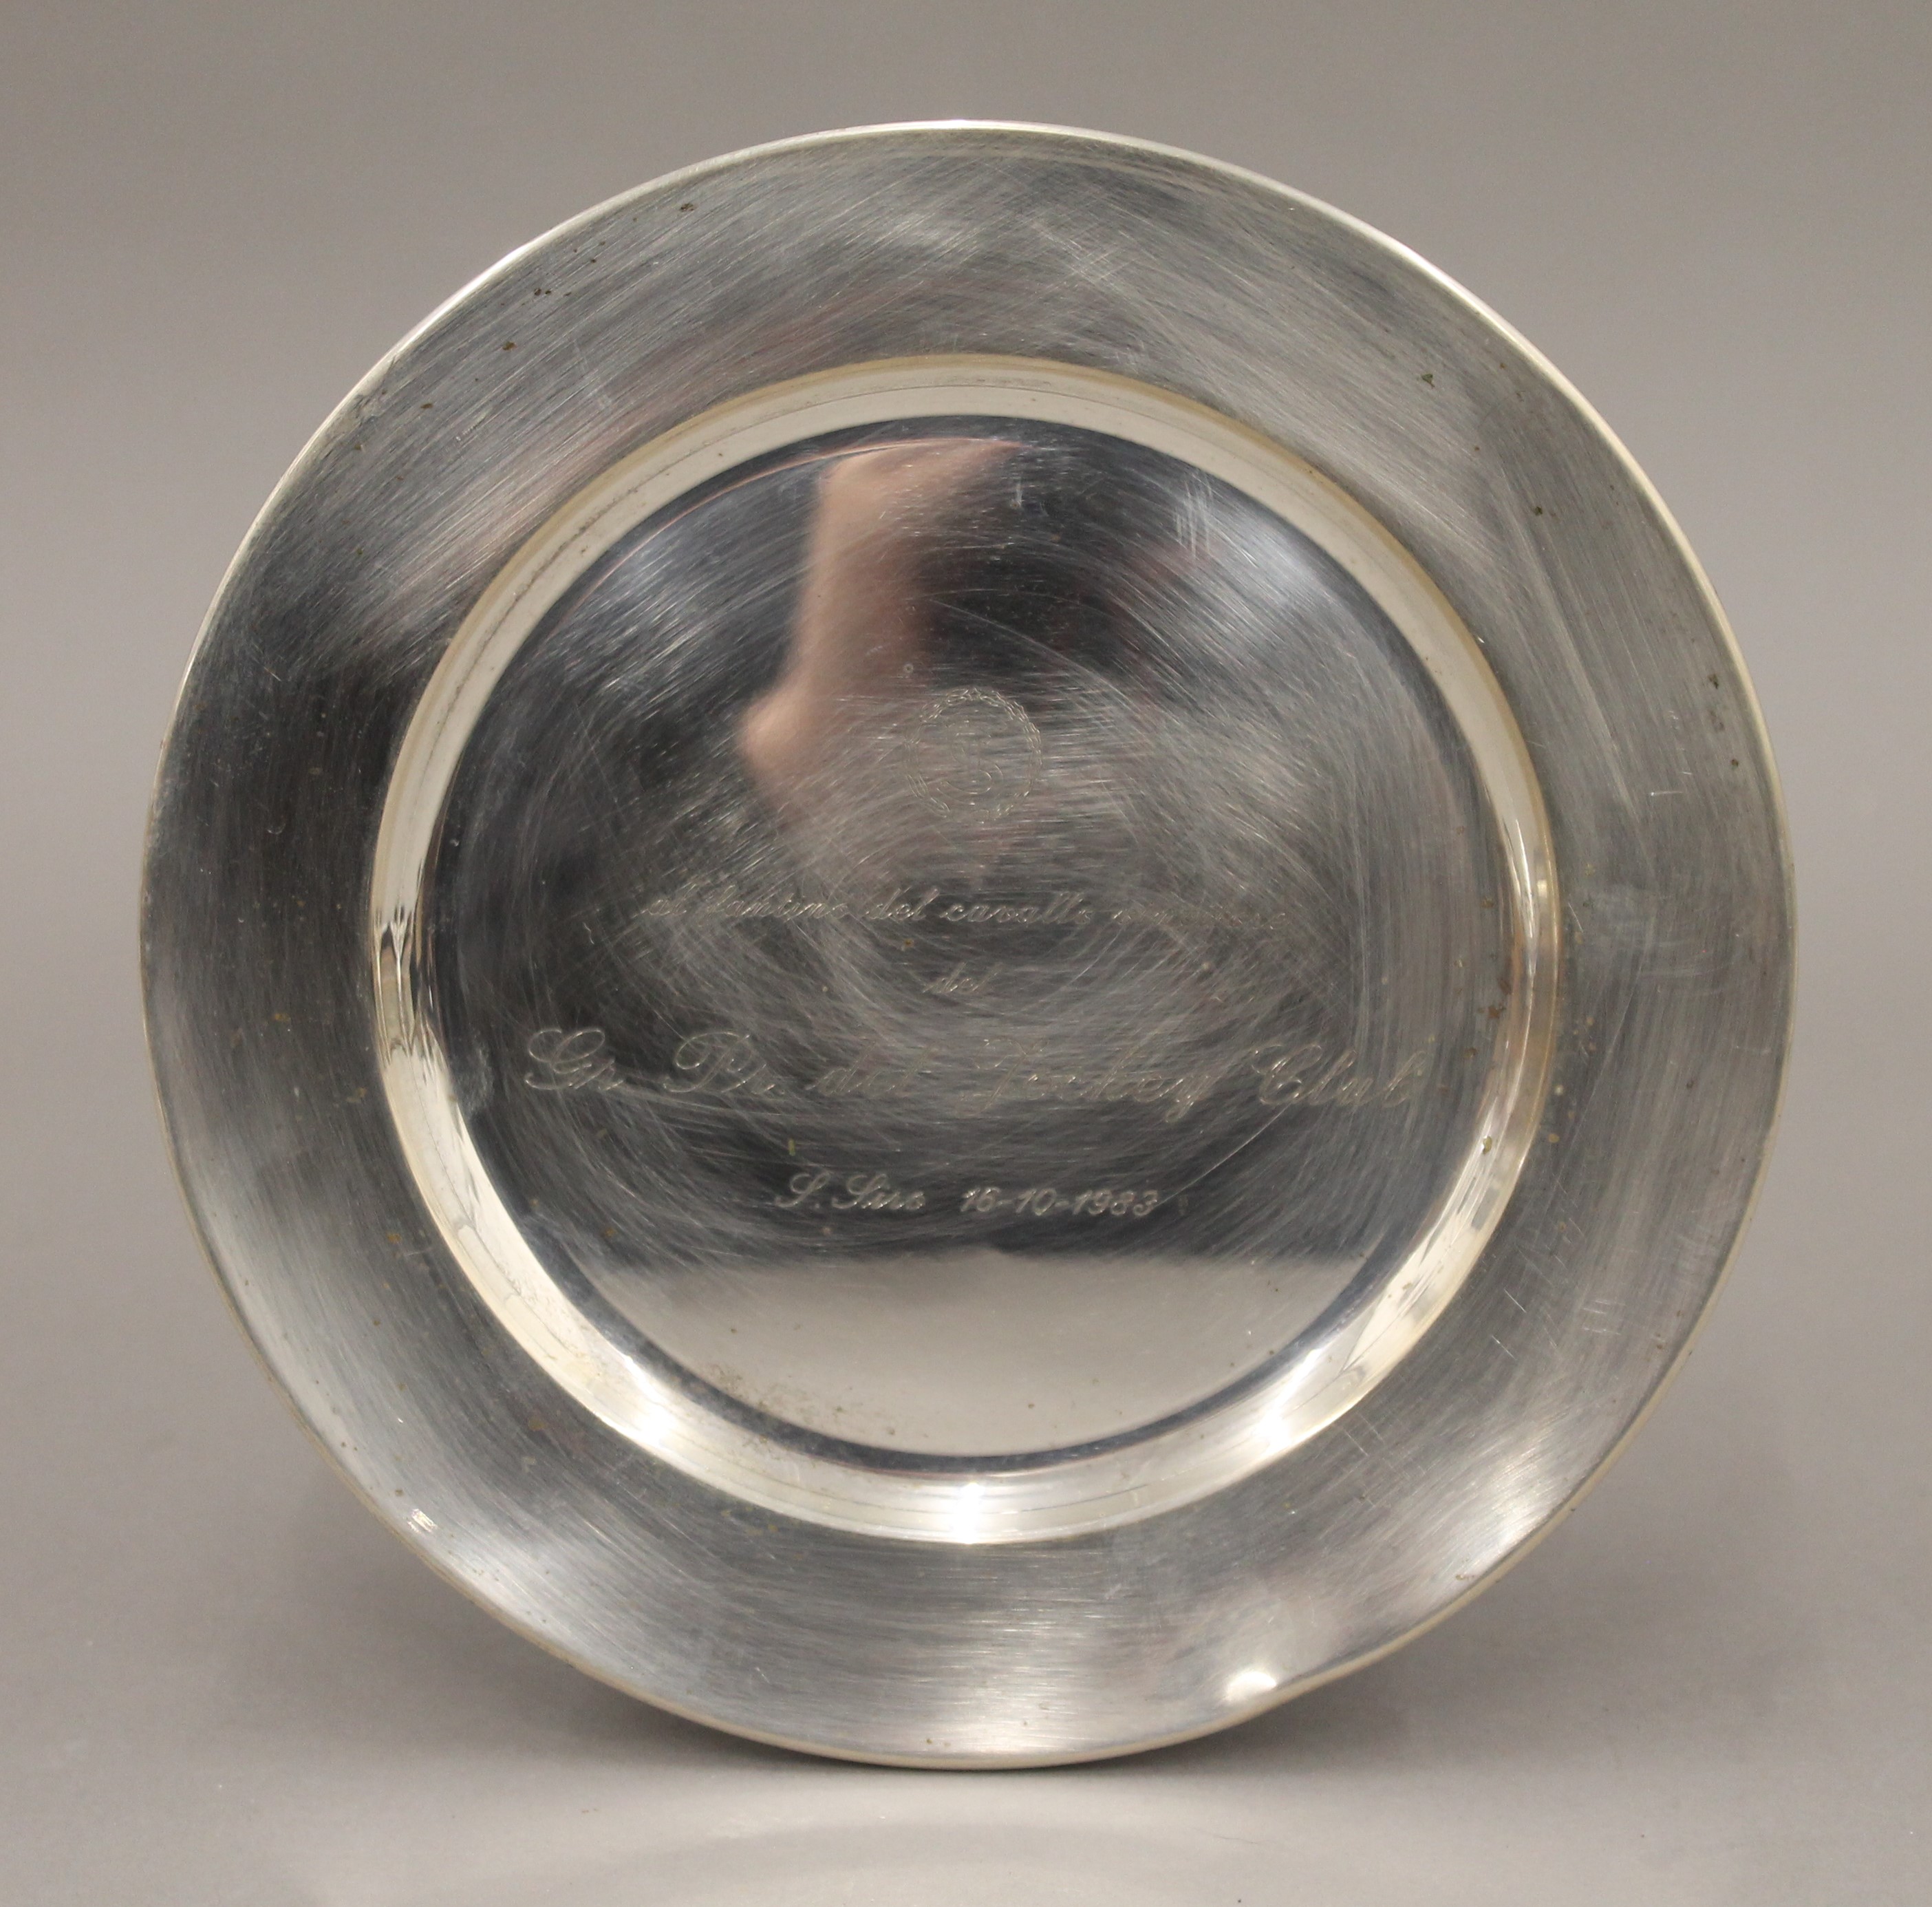 Six Lester Piggott Horse Racing trophy plates. The largest 23 cm diameter. - Image 4 of 7